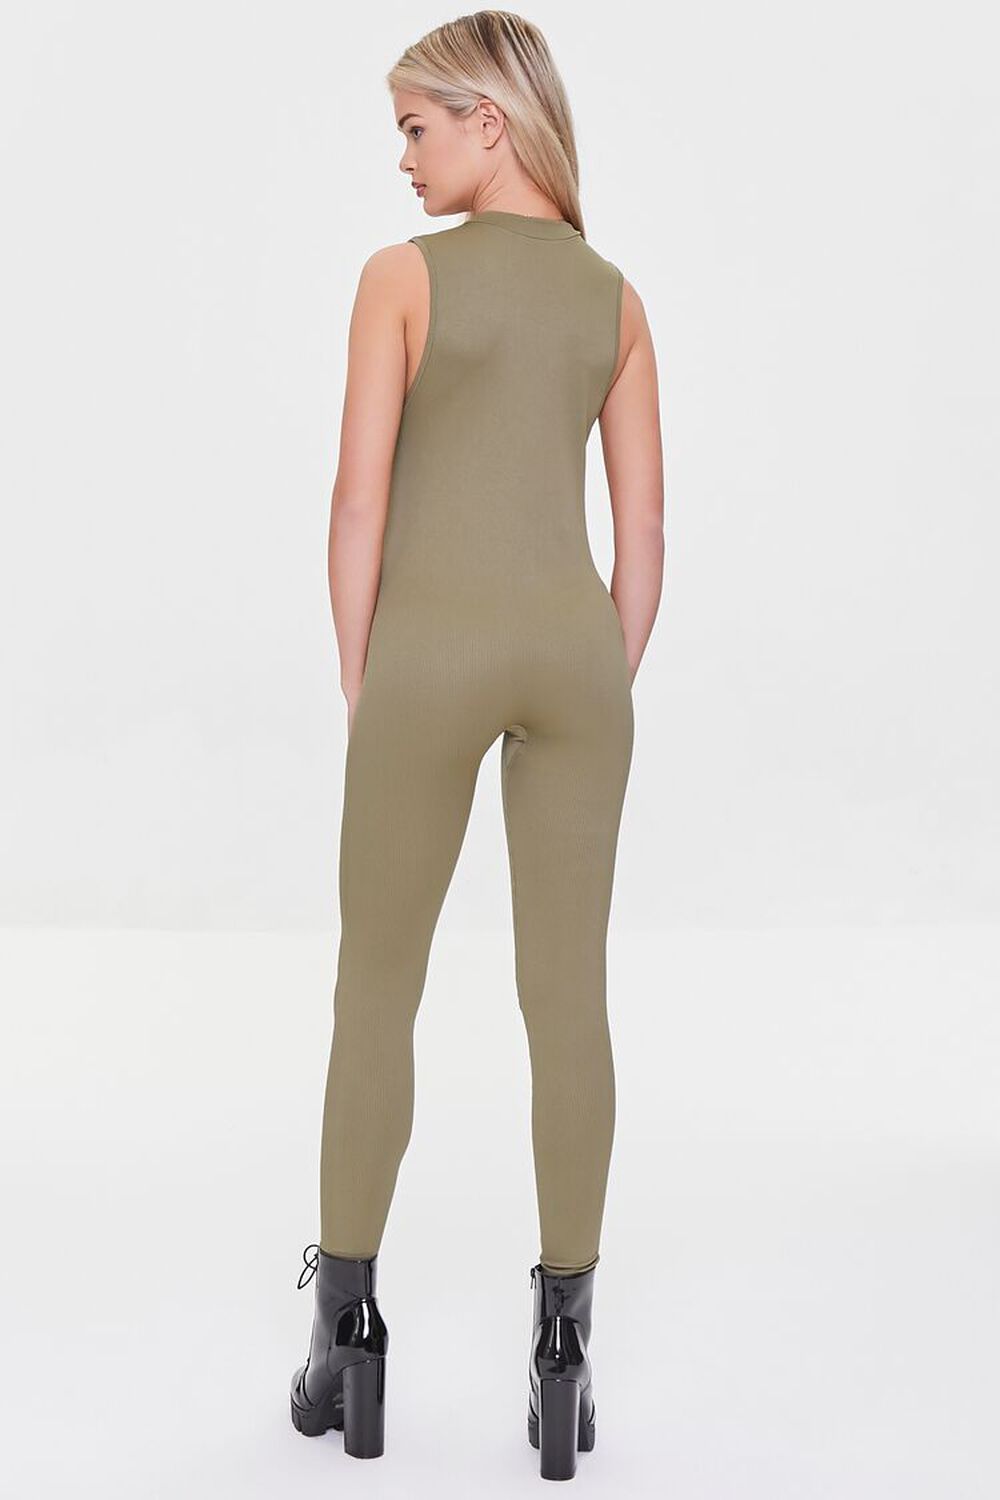 OLIVE Ribbed Half-Zip Jumpsuit, image 3